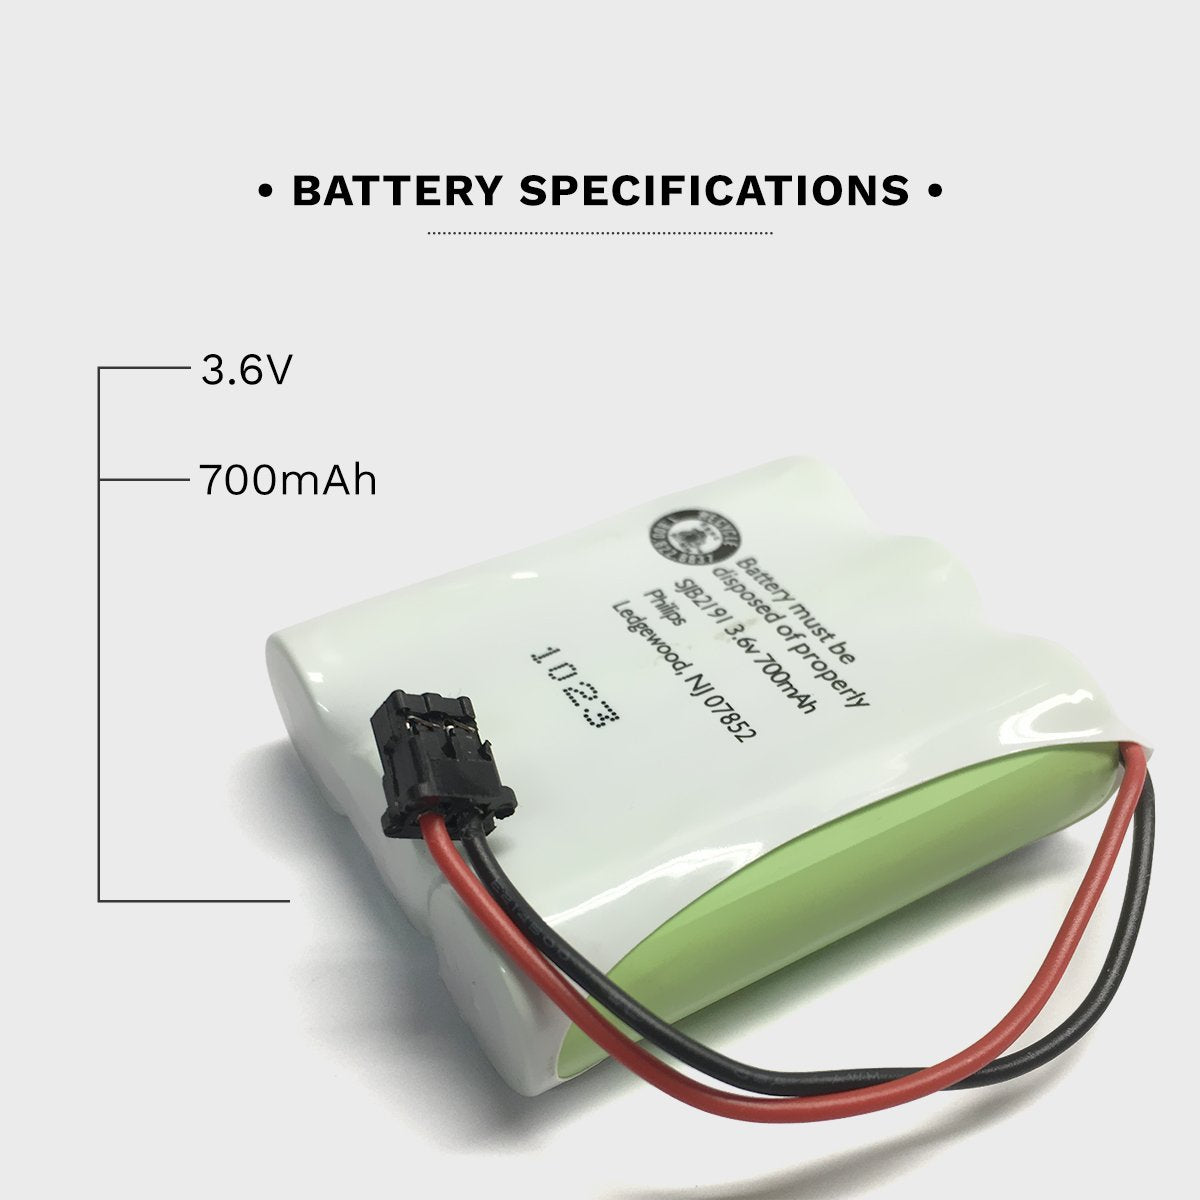 Sharp FT-5405 Cordless Phone Battery